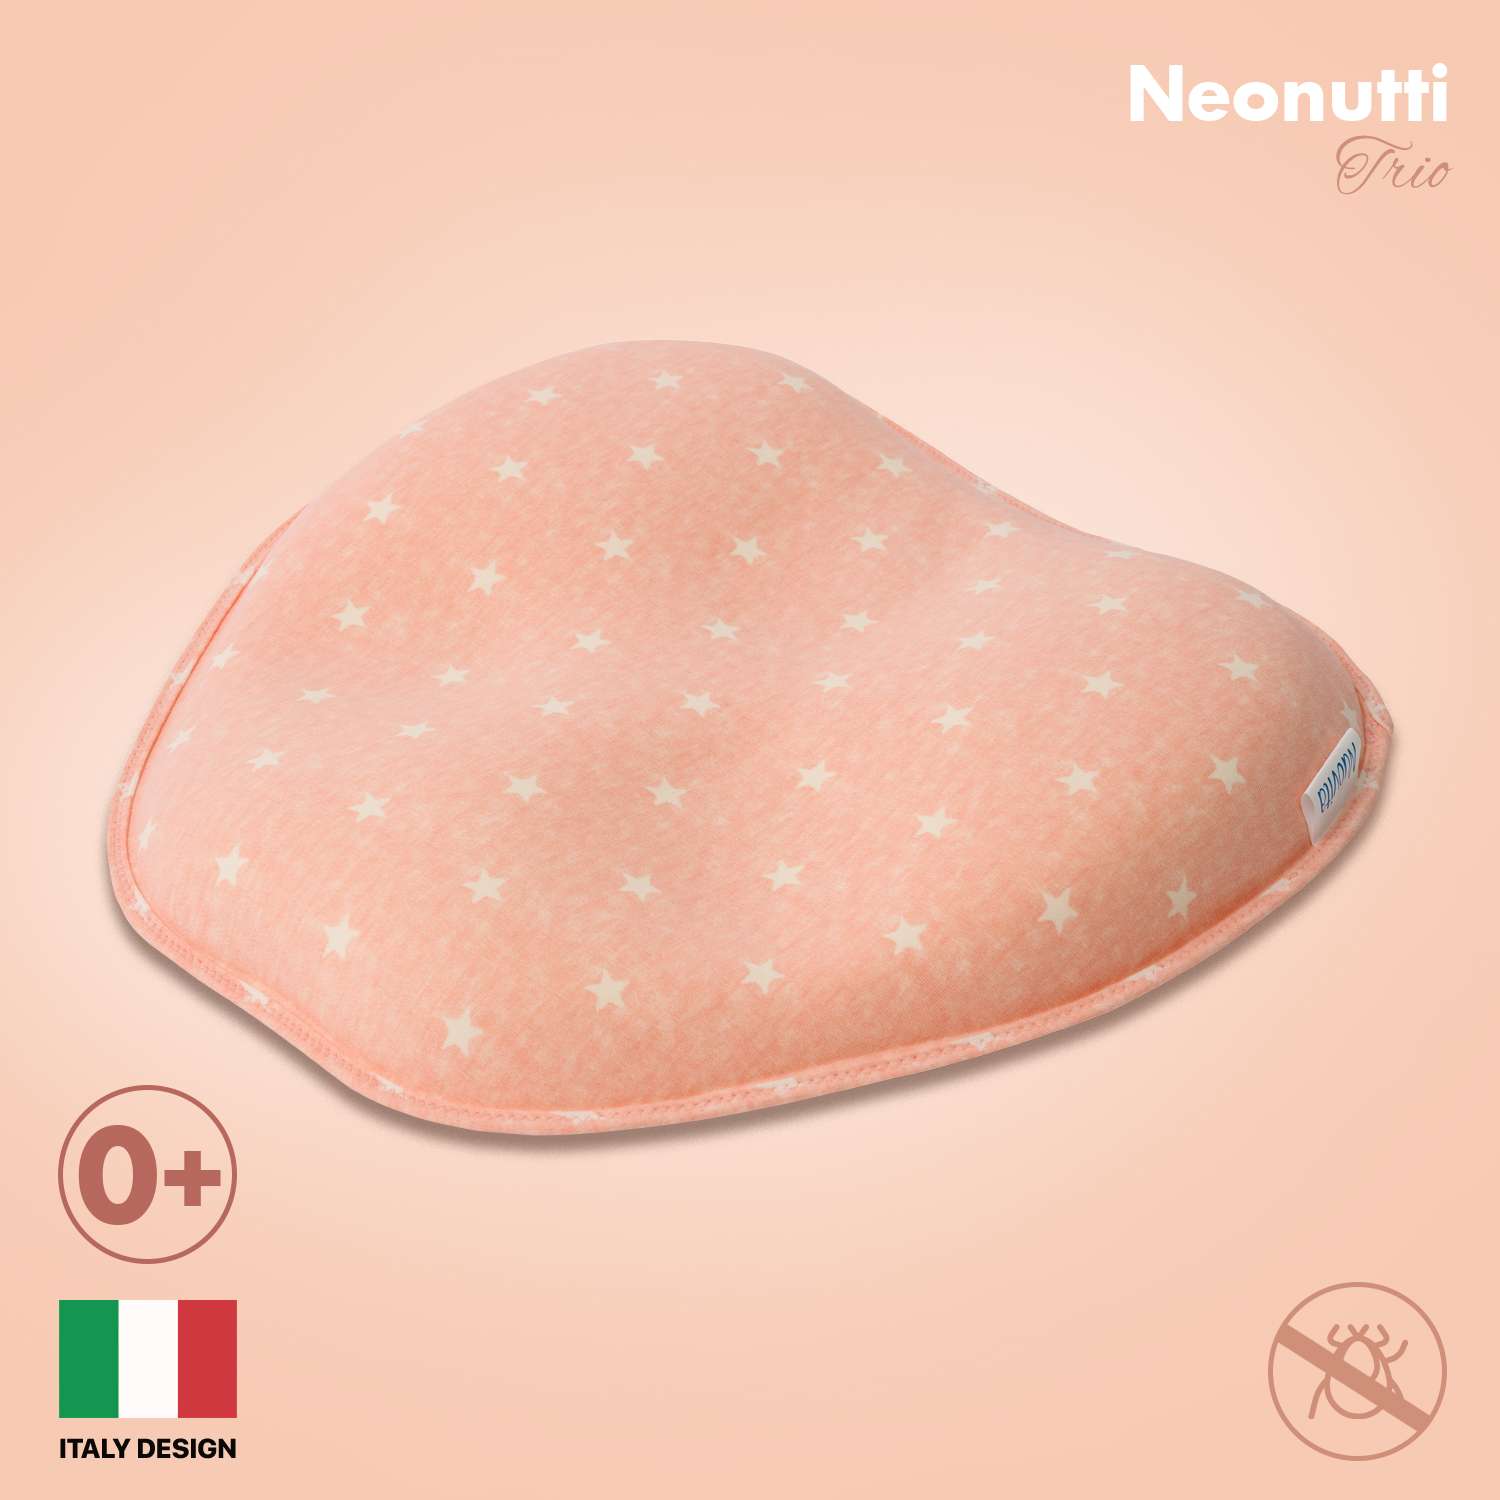 Подушка для новорожденного Nuovita Neonutti Trio Dipinto Звезды розовая - фото 2